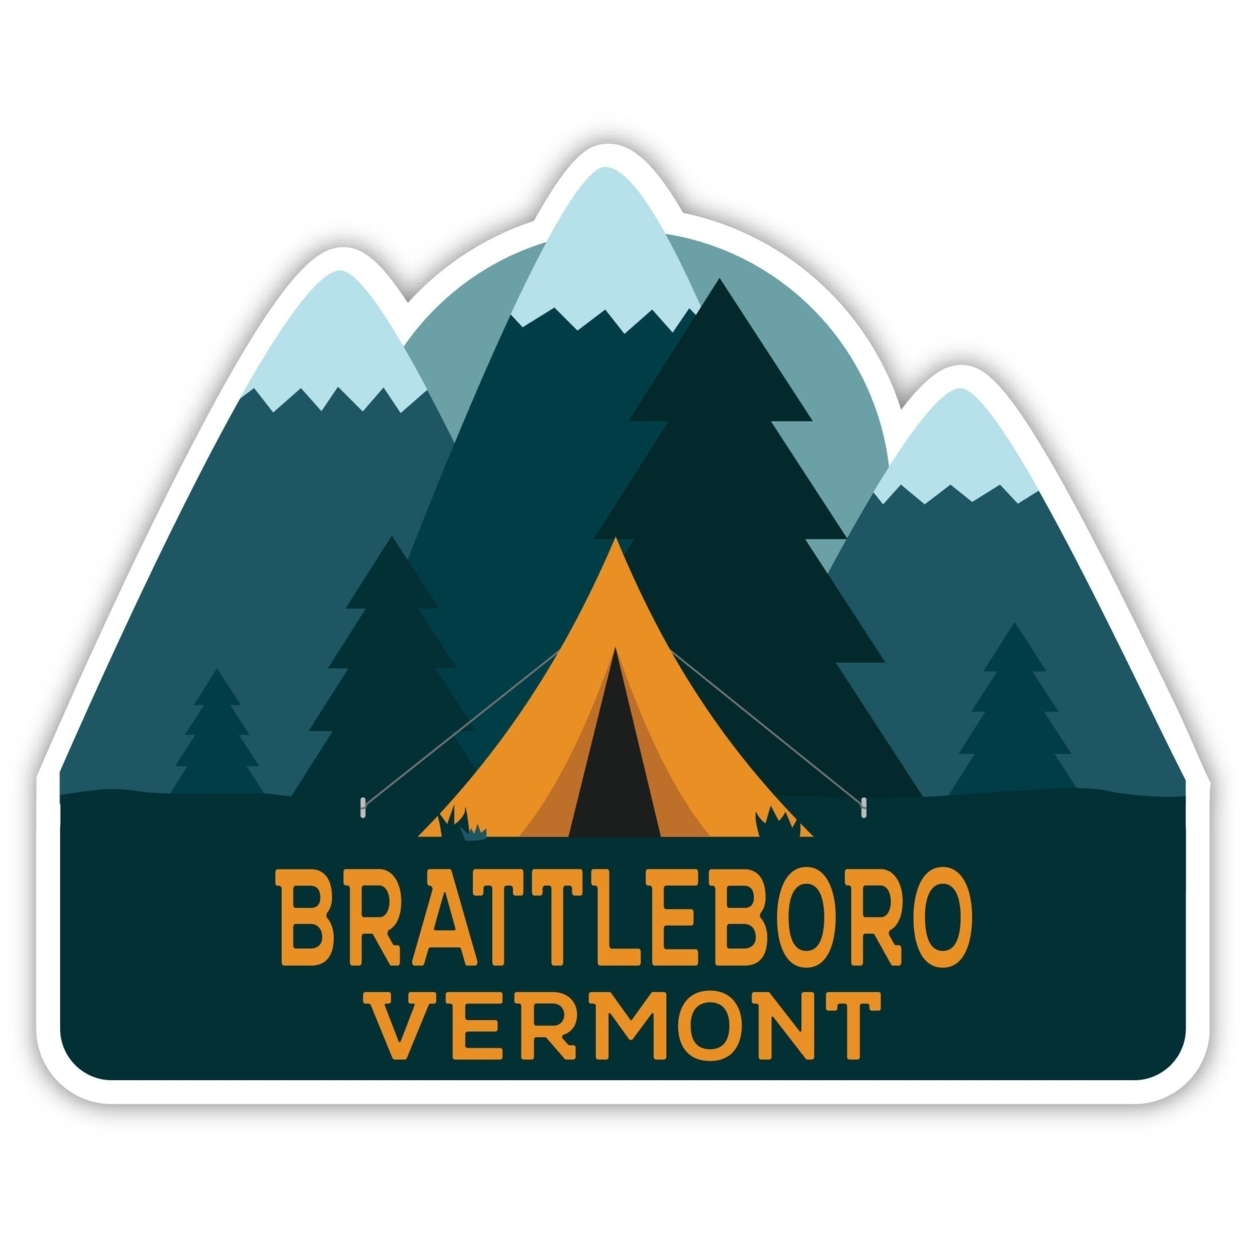 Brattleboro Vermont Souvenir Decorative Stickers (Choose Theme And Size) - 4-Pack, 10-Inch, Tent